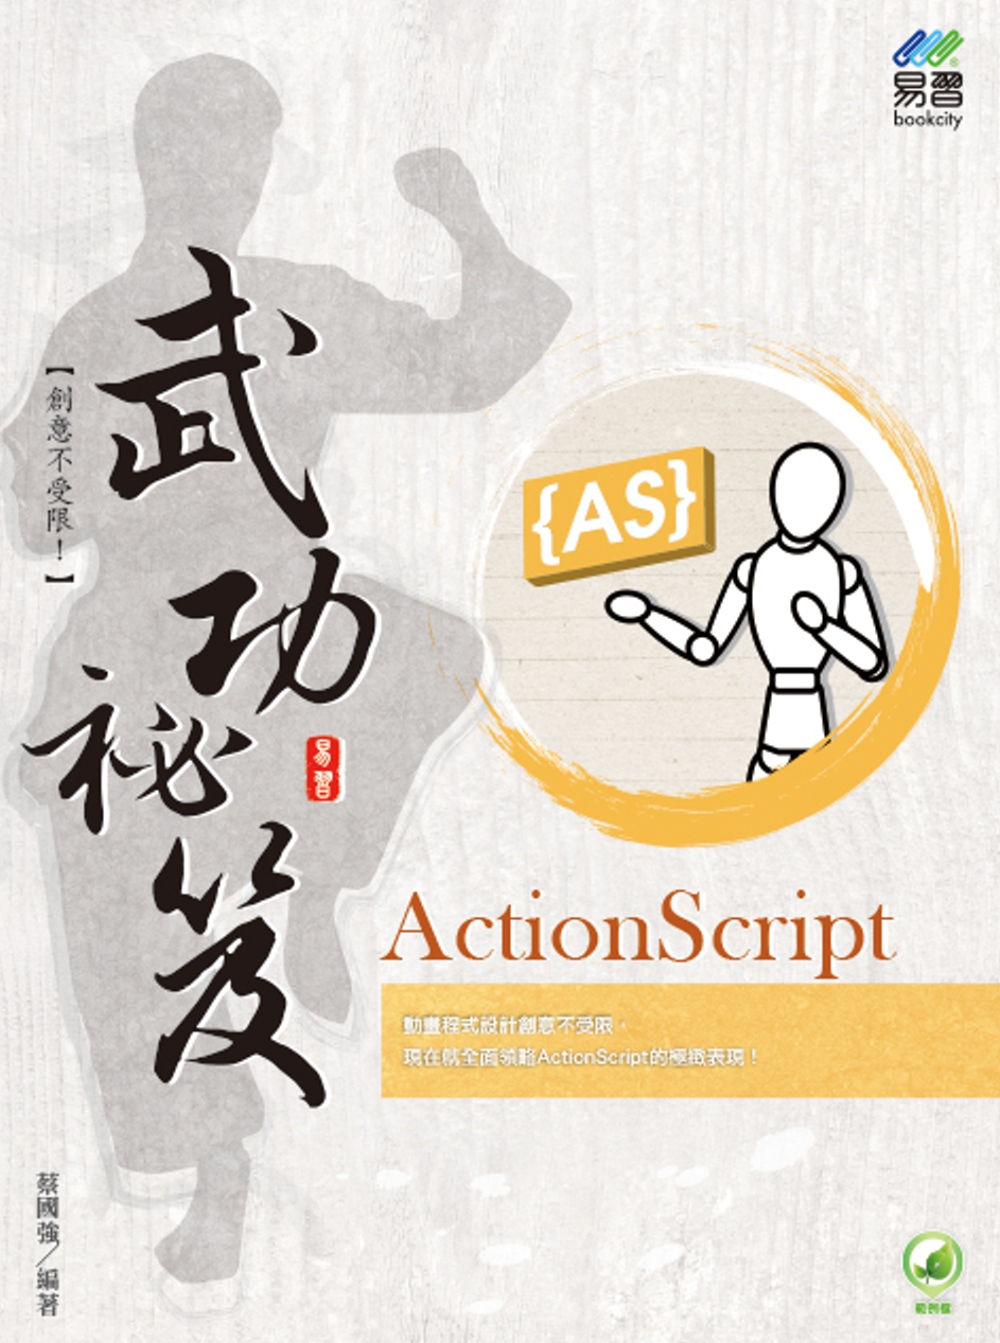 ActionScript  武功祕笈